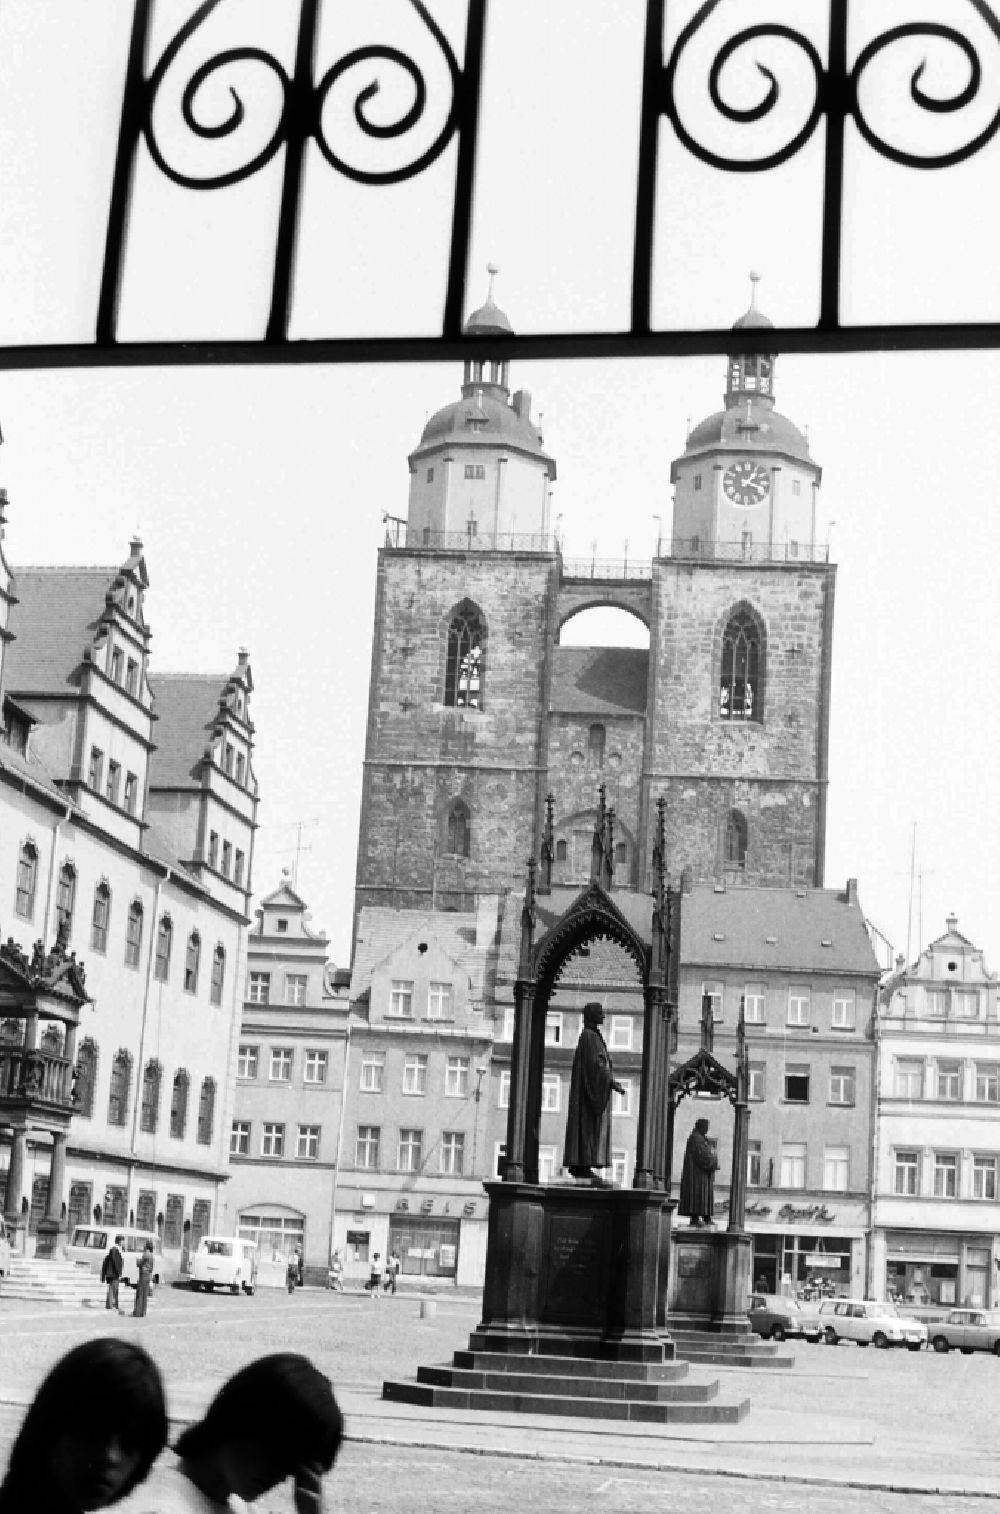 DDR-Fotoarchiv: Lutherstadt Wittenberg - Stadtrundgang General G. Göttnig besucht die Stadt Lutherstadt Wittenberg in Sachsen-Anhalt in der DDR